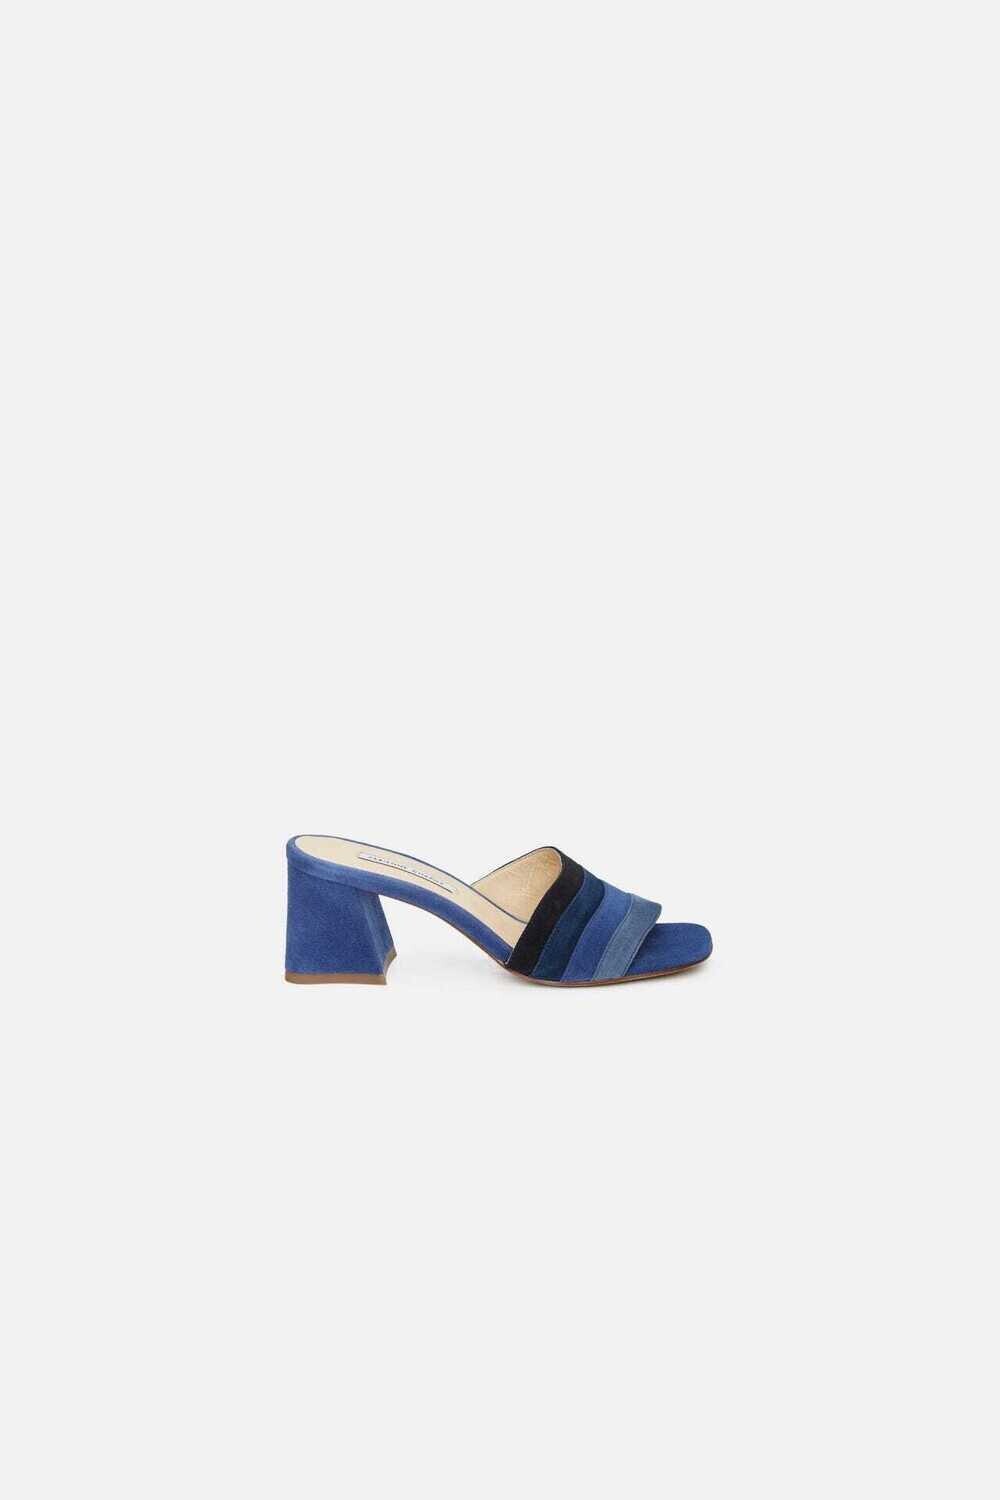 fabienne-chapot-ocean-blue-swirl-ted-mules-sandals